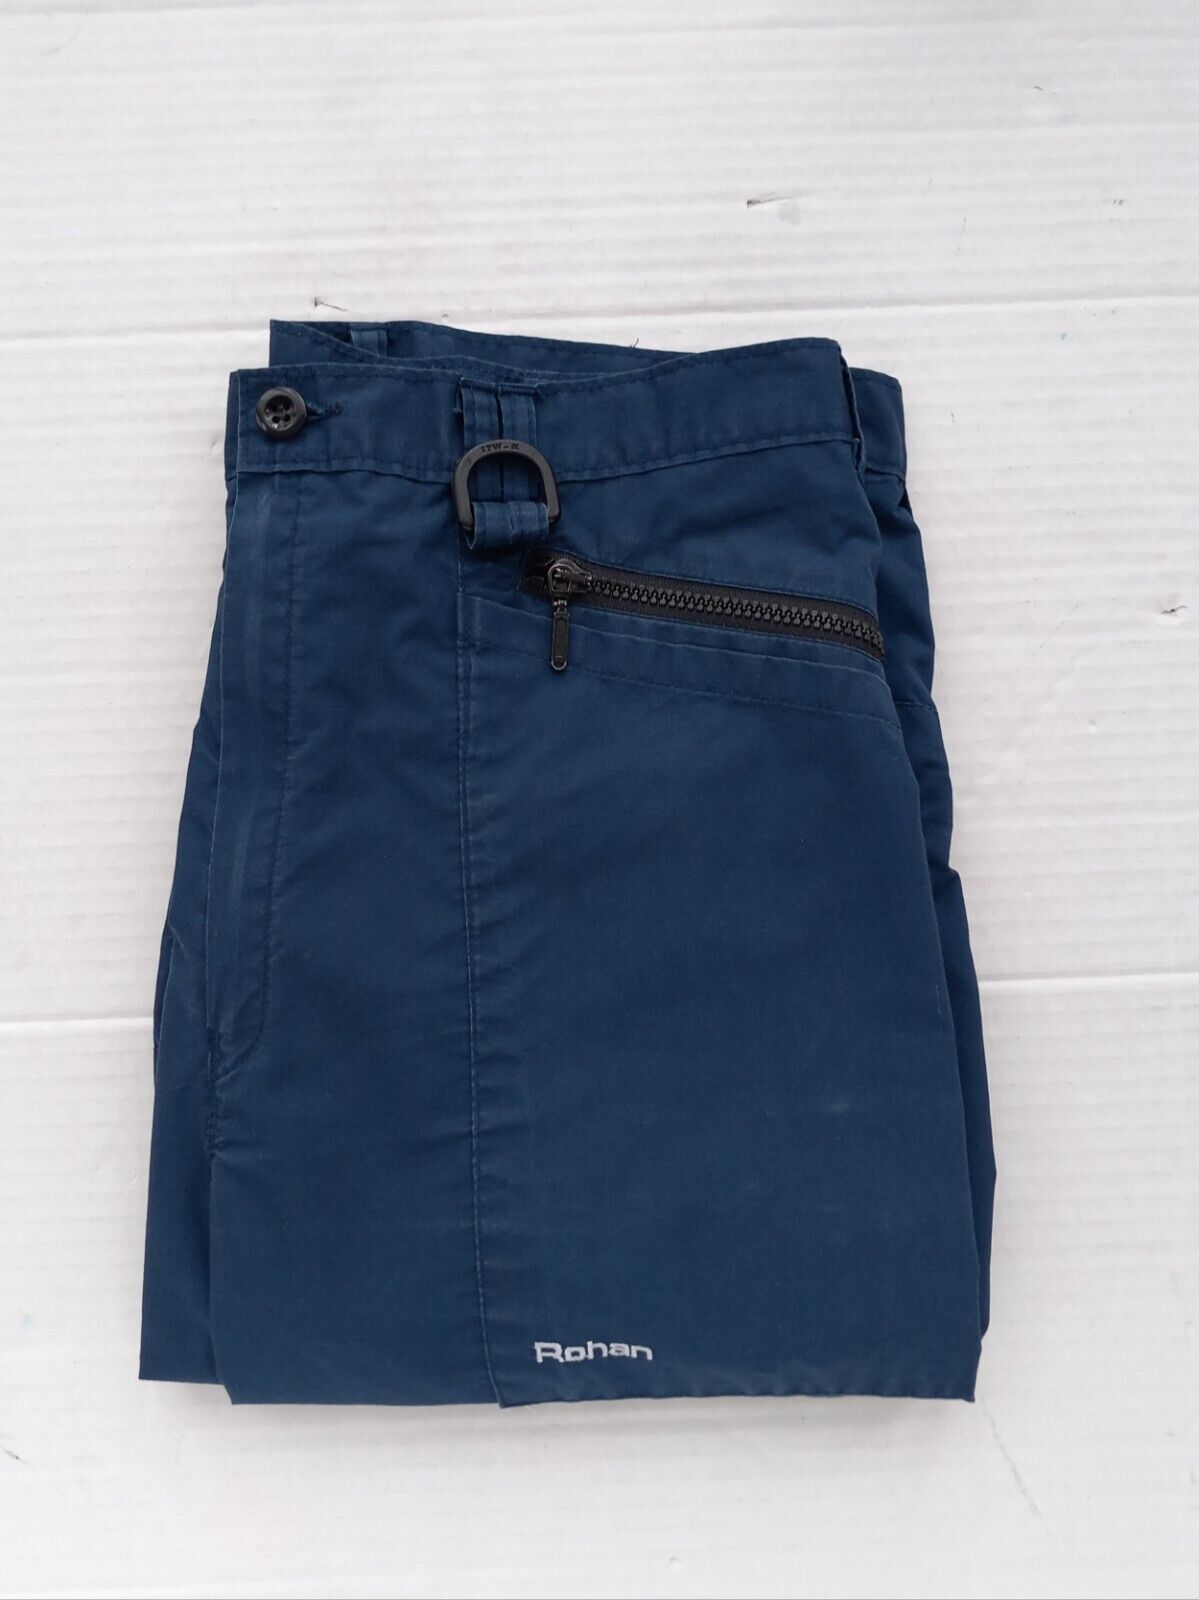 ROHAN Men's Bags Trousers Walking Hiking Size 35 Blue | eBay